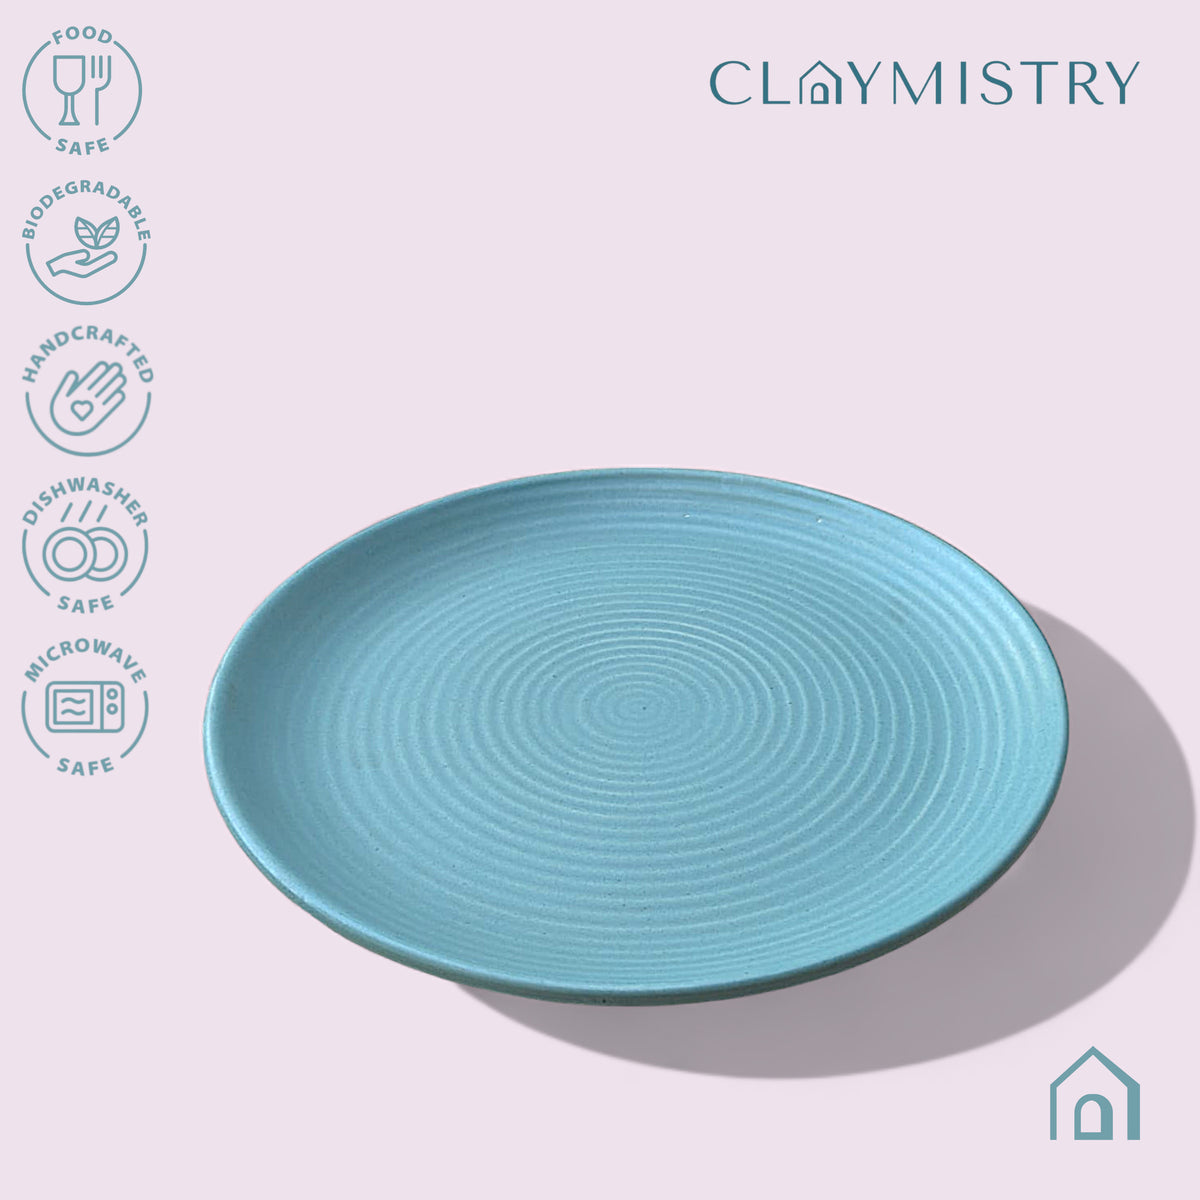 Claymistry Ceramic Dinner & Snacks Serving Plate | 26cm * 26cm * 3cm | Matte Finish | Dishwasher, Oven & Microwave Safe | Dinnerware Serving Plate Thali | Premium Kitchen Crockery